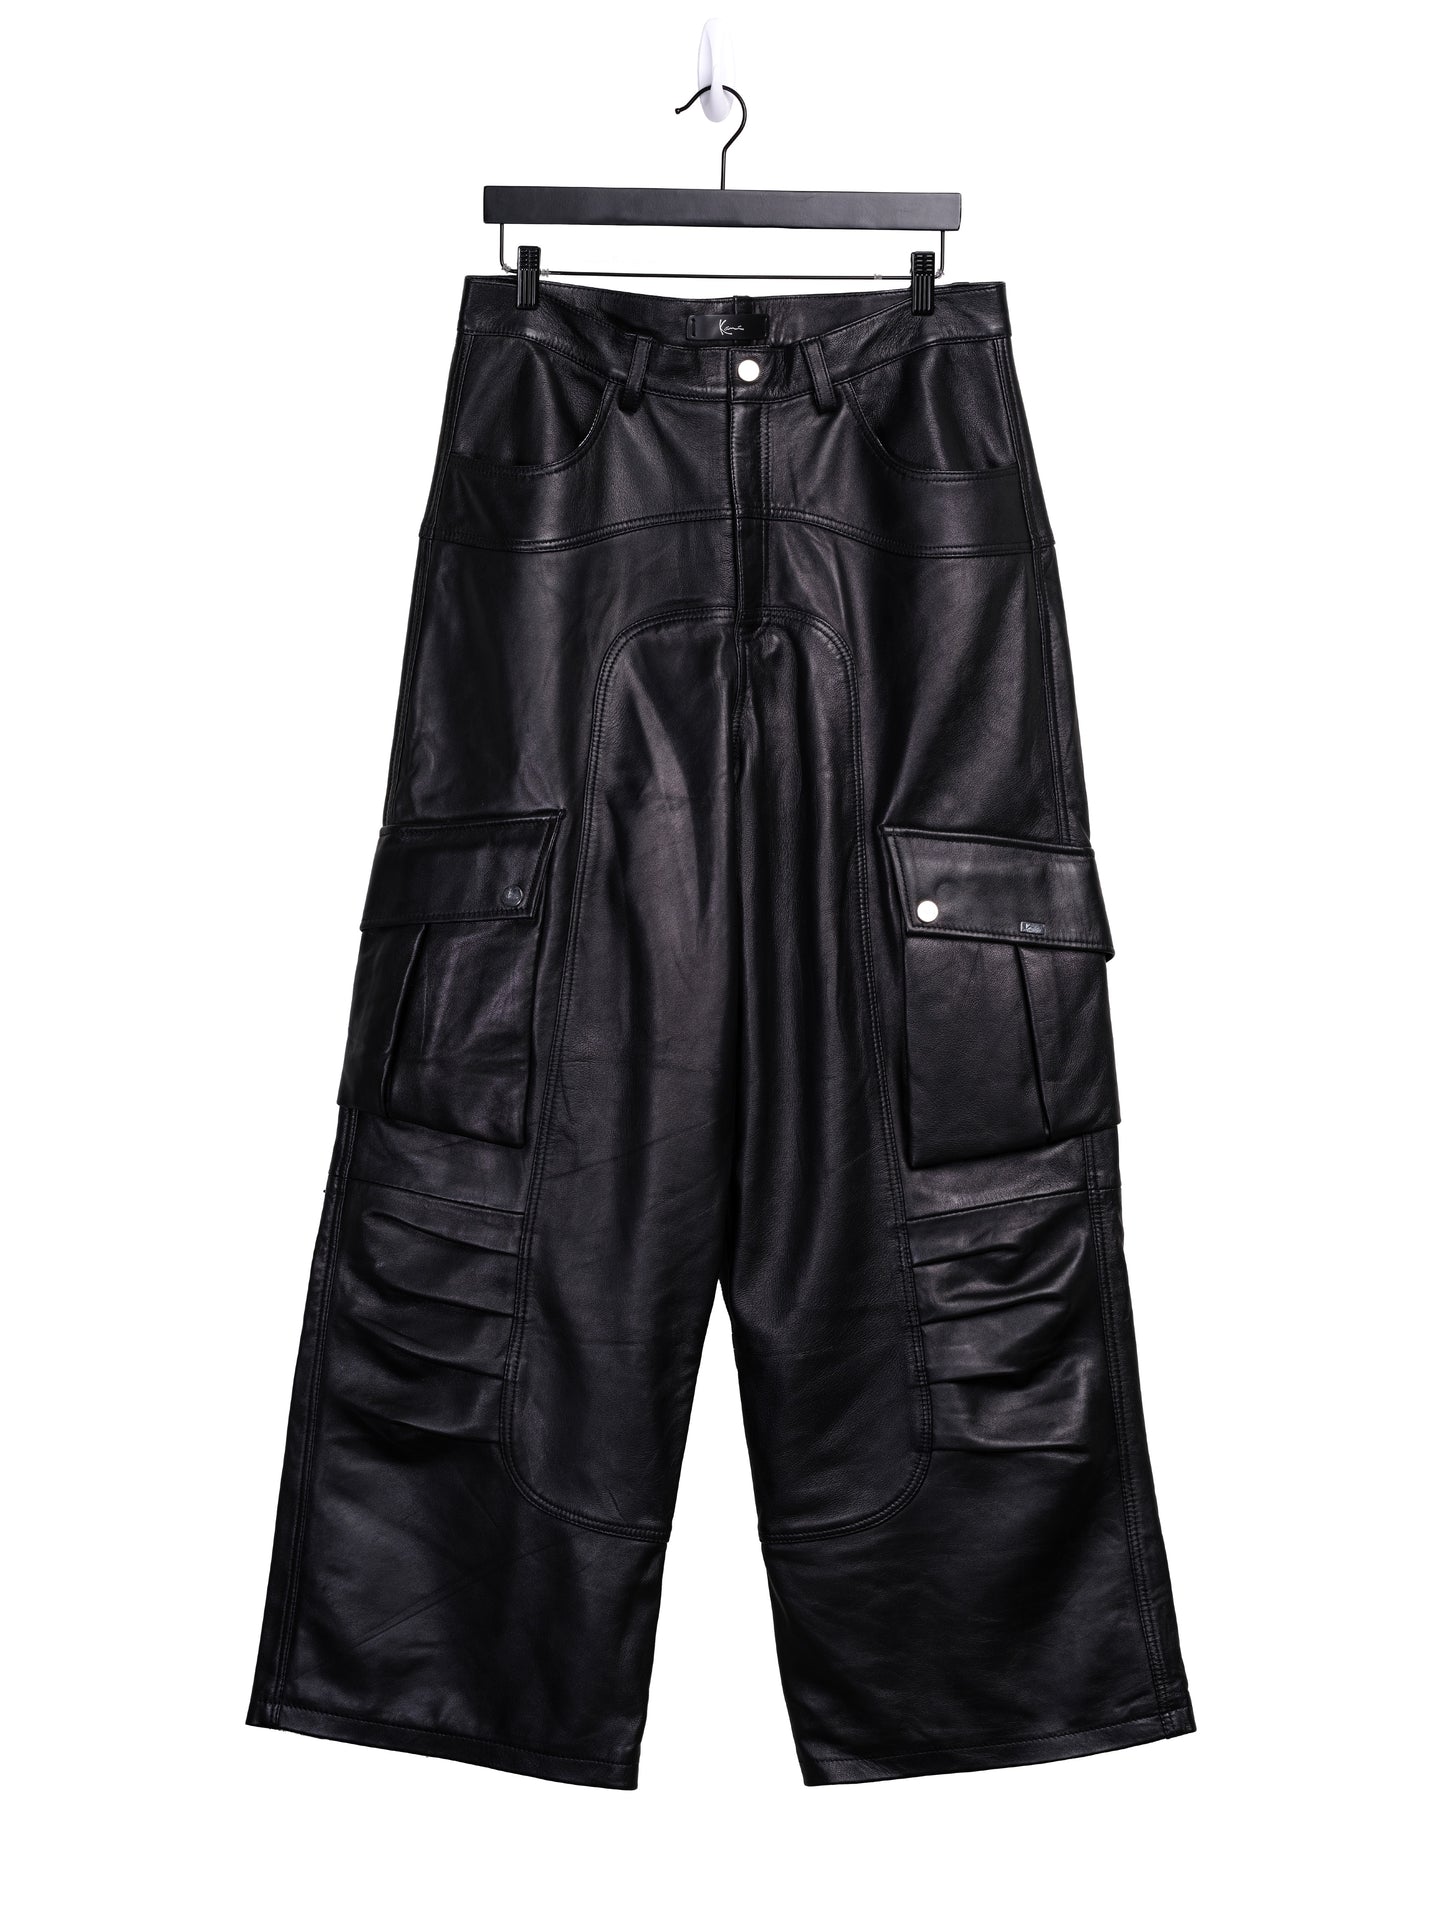 Belmont Cargo Pants (Leather)